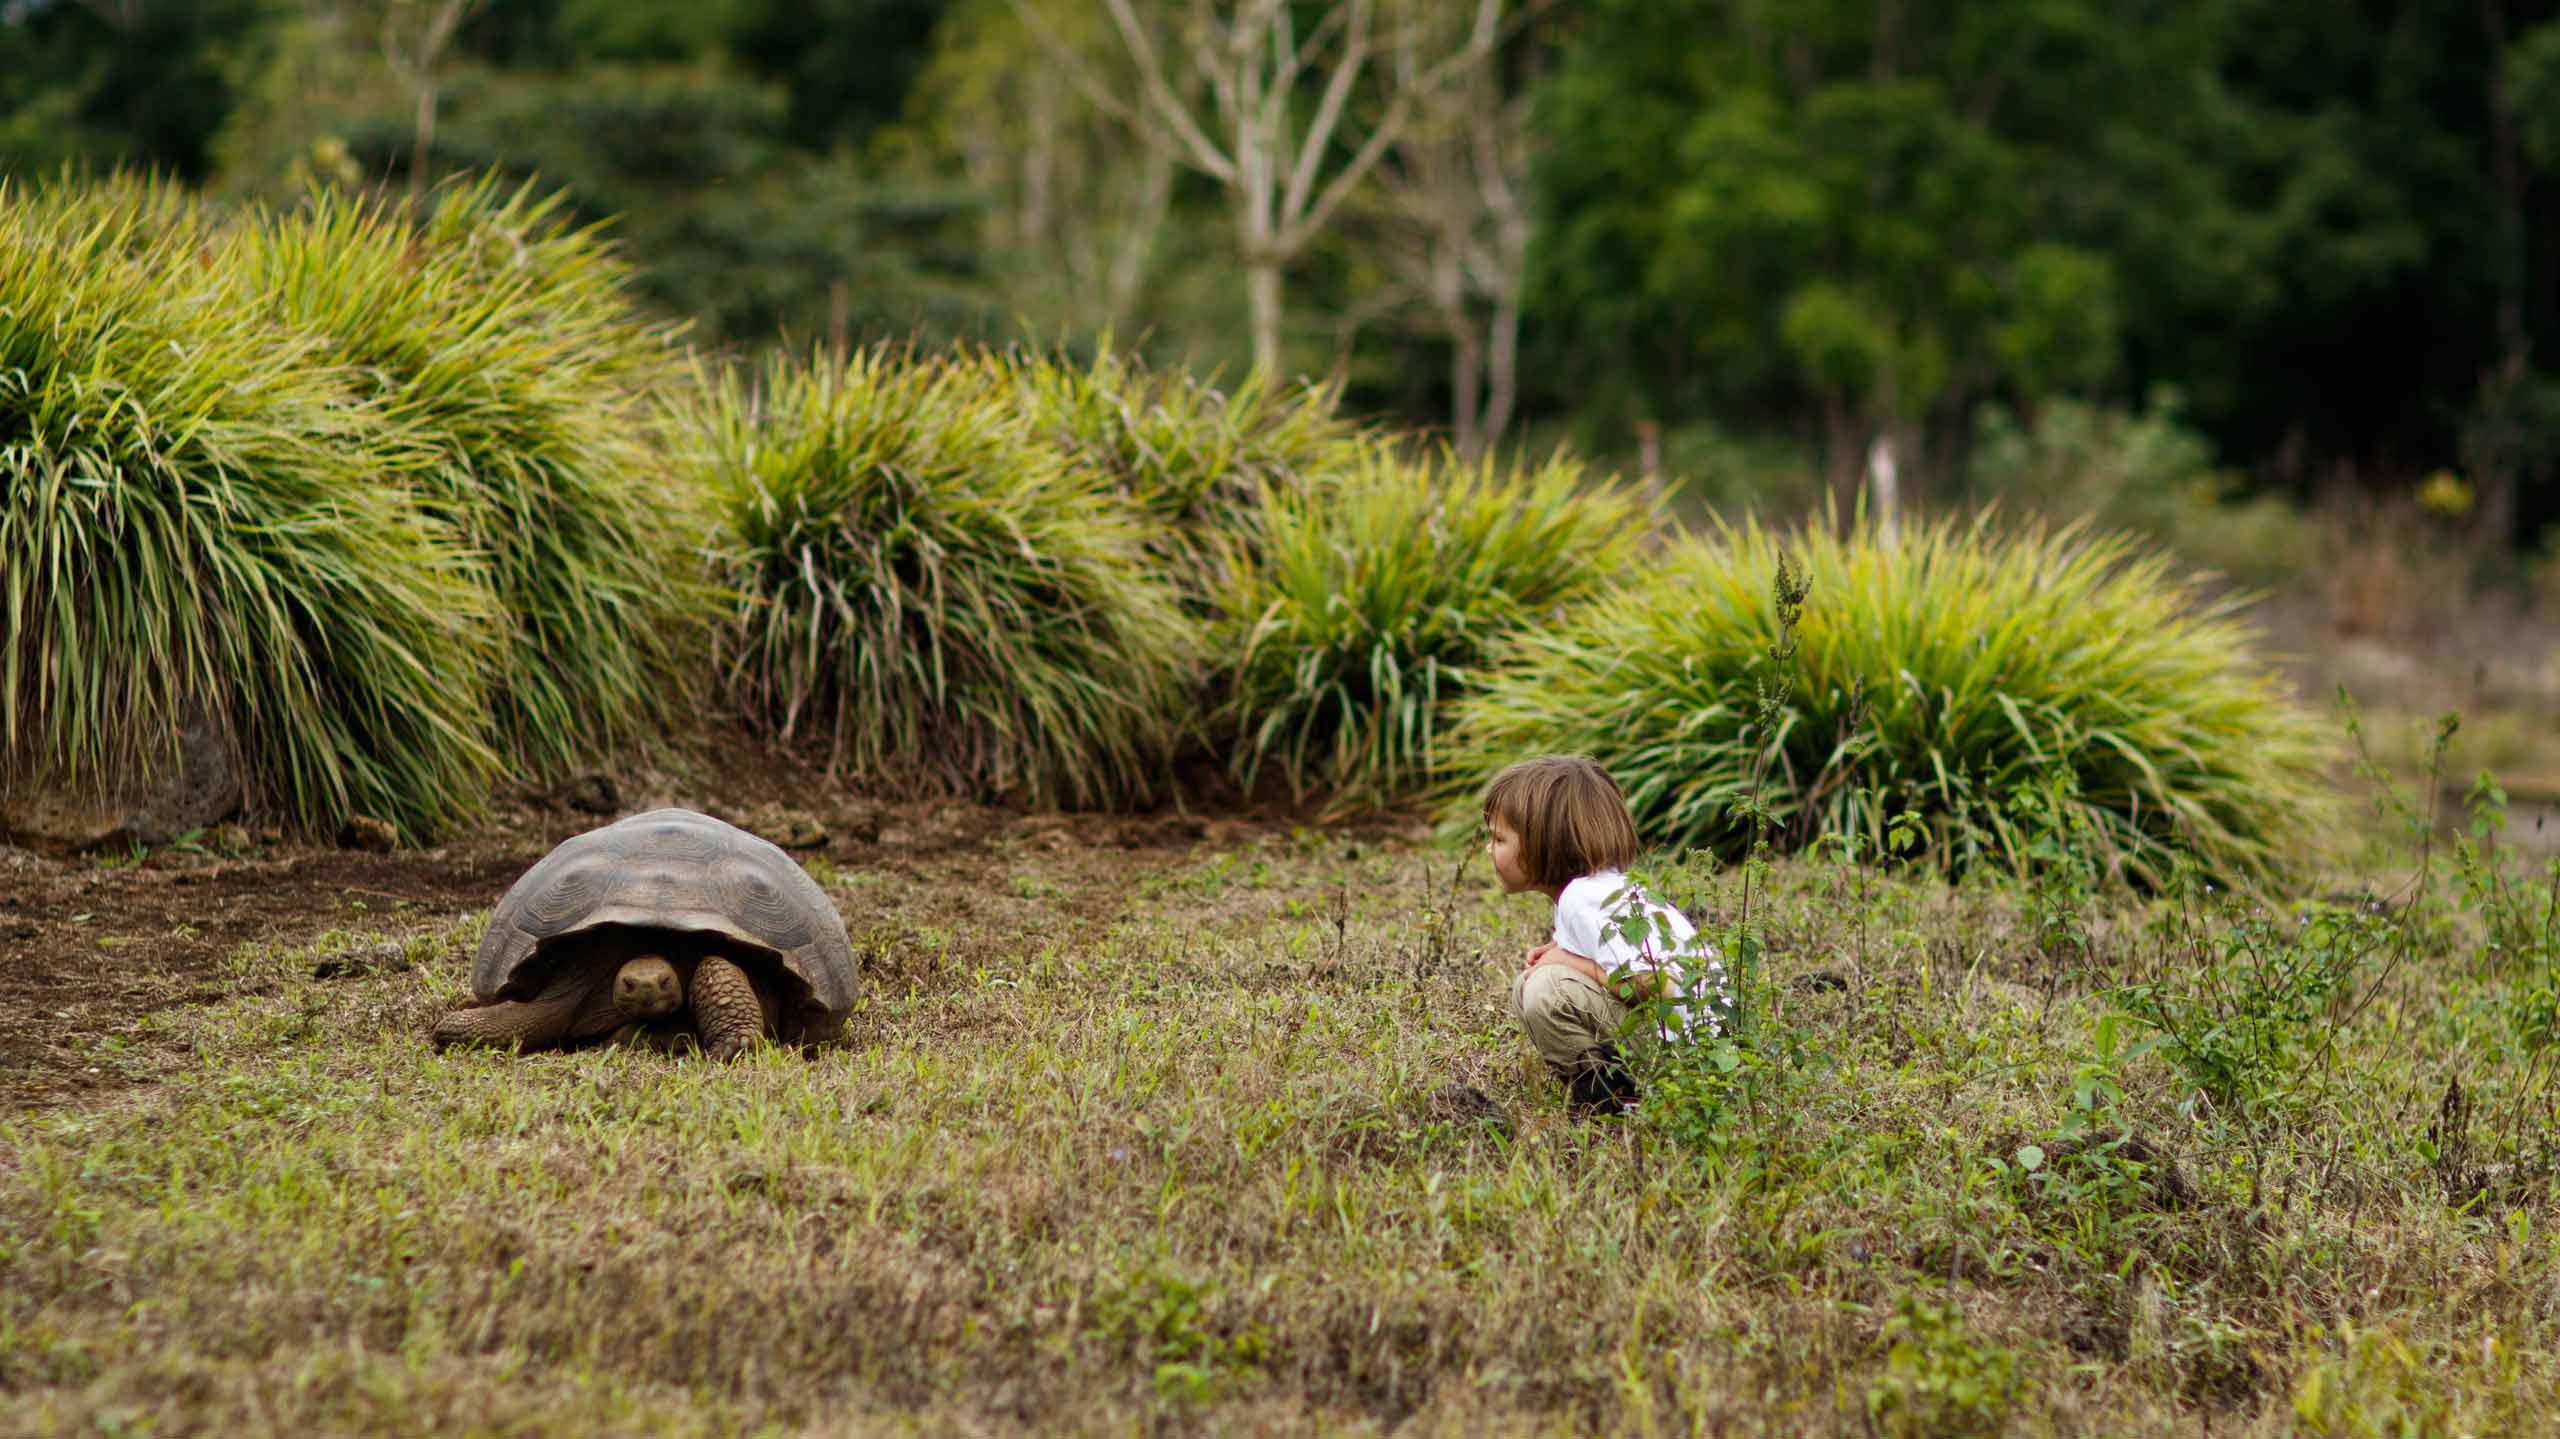 Giant Tortoise on Santa Cruz island in Galapagos